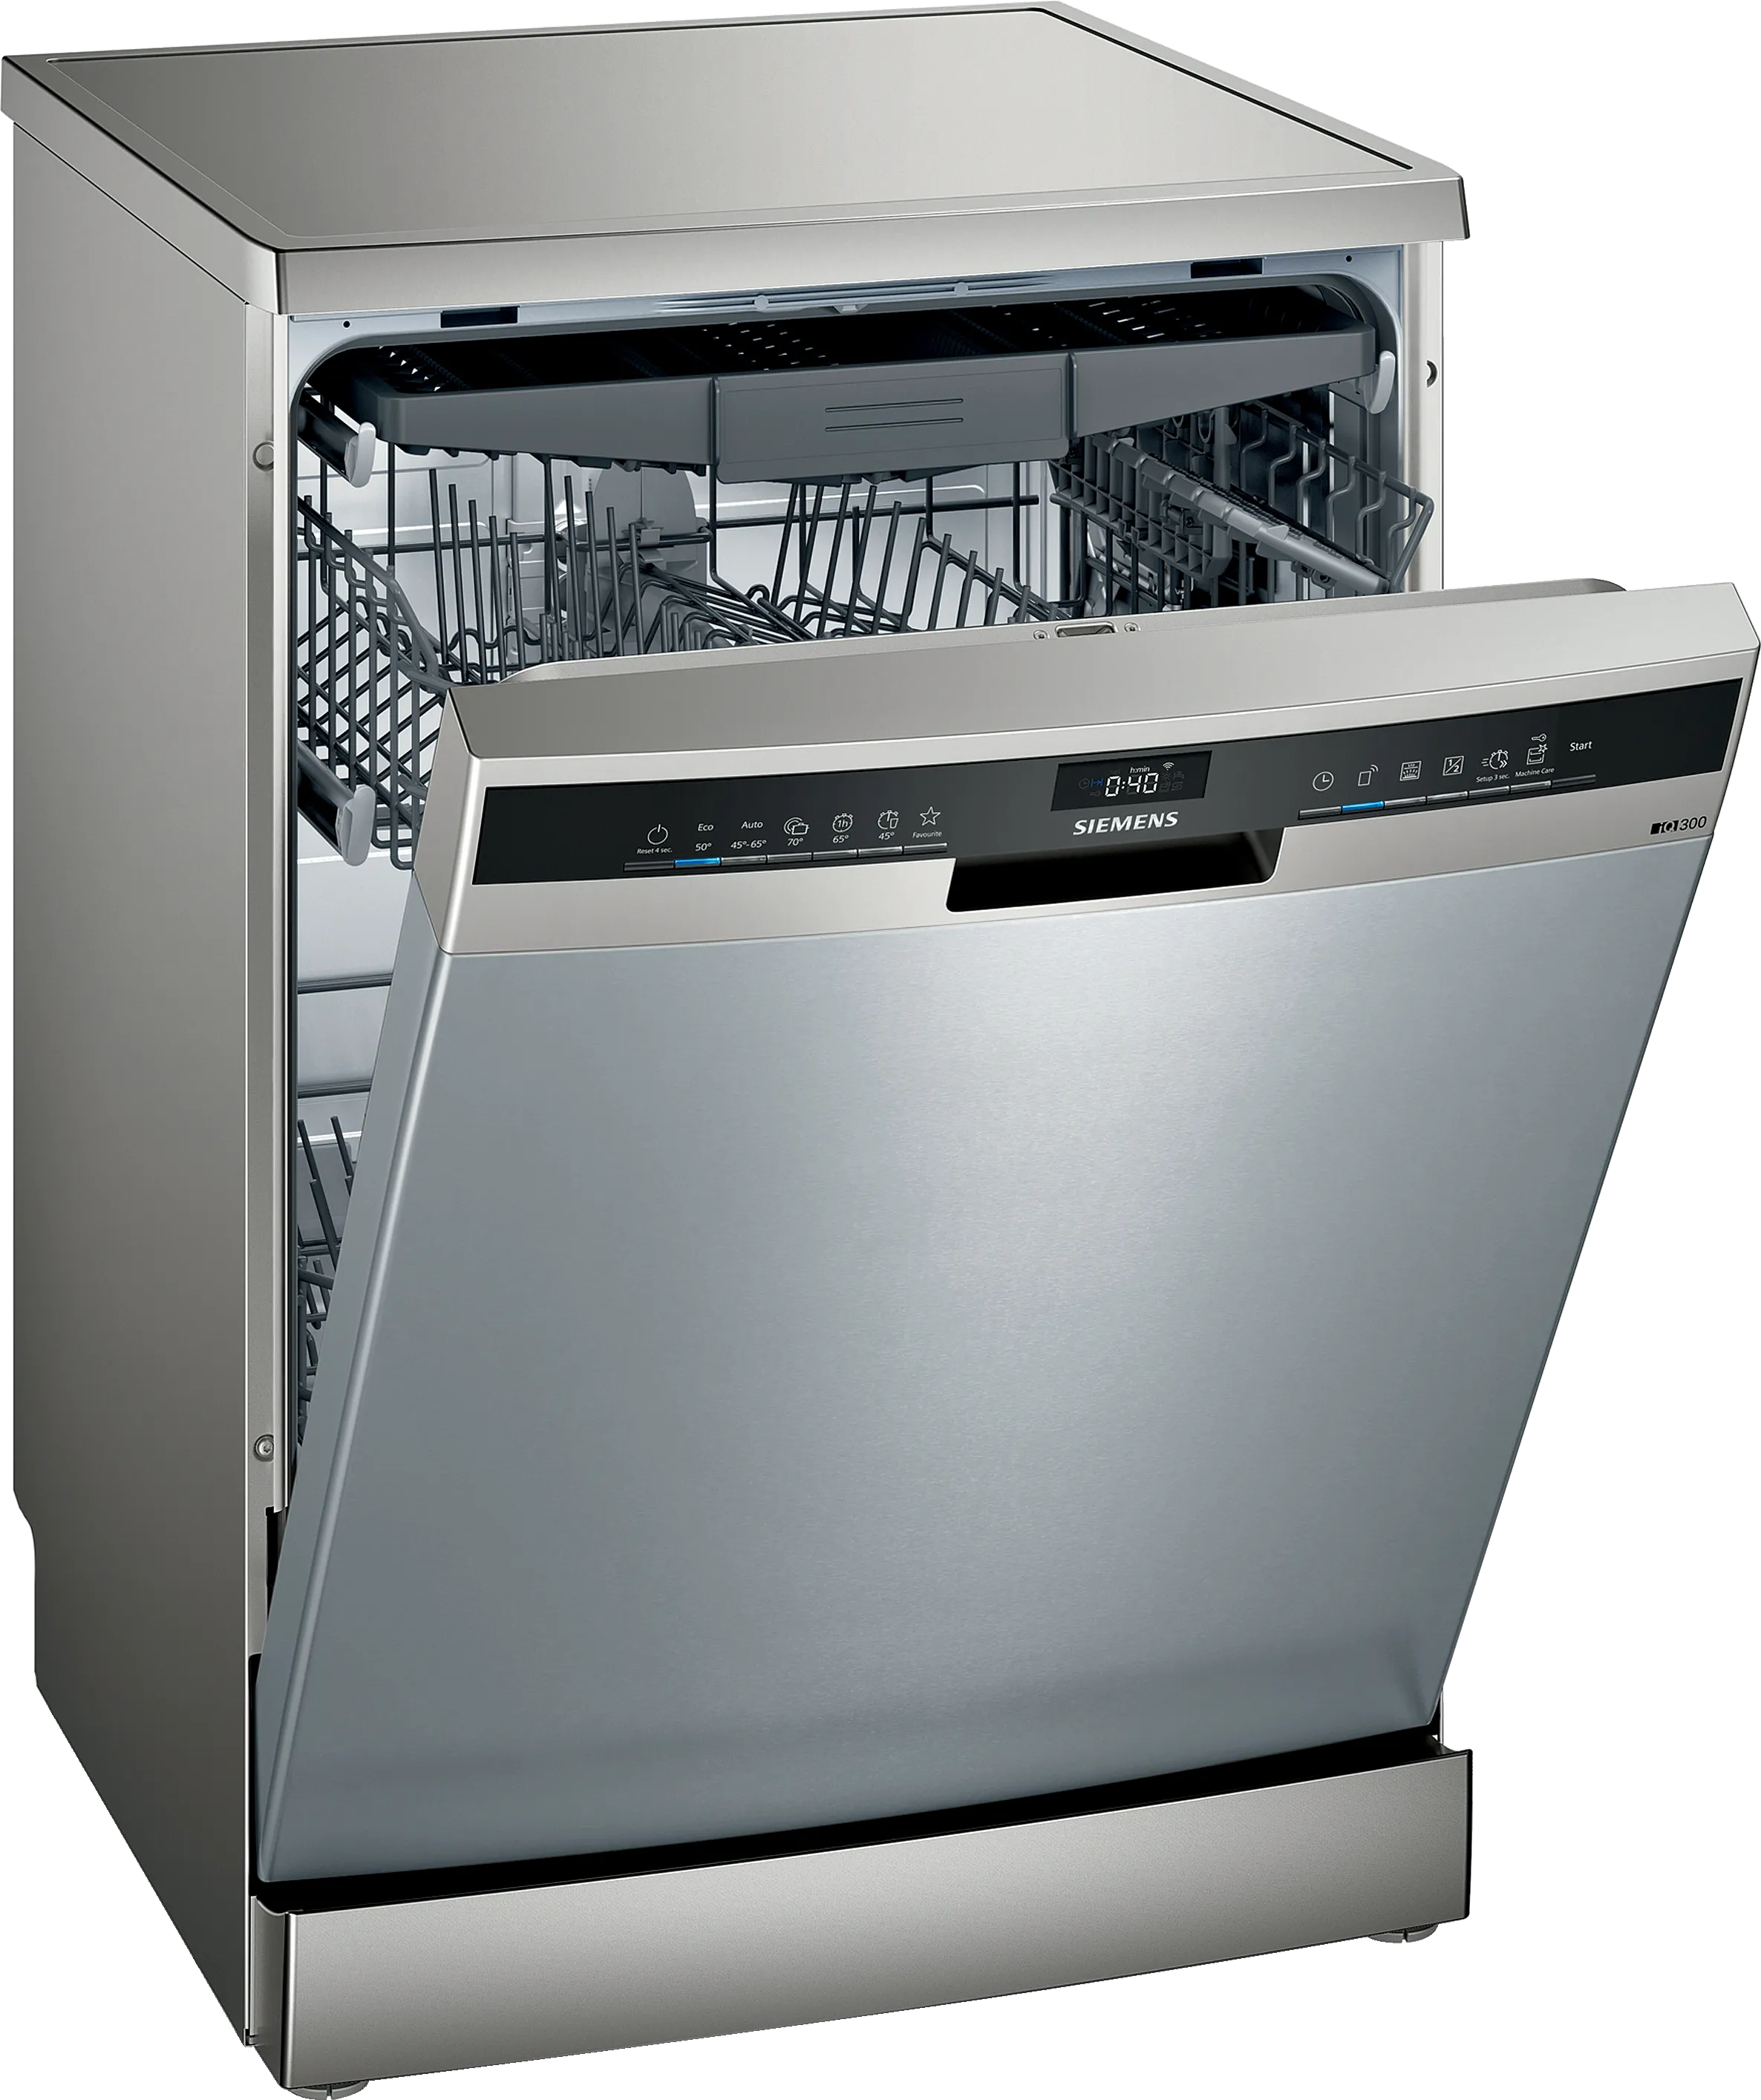 iQ300 free-standing dishwasher 60 cm silver inox 